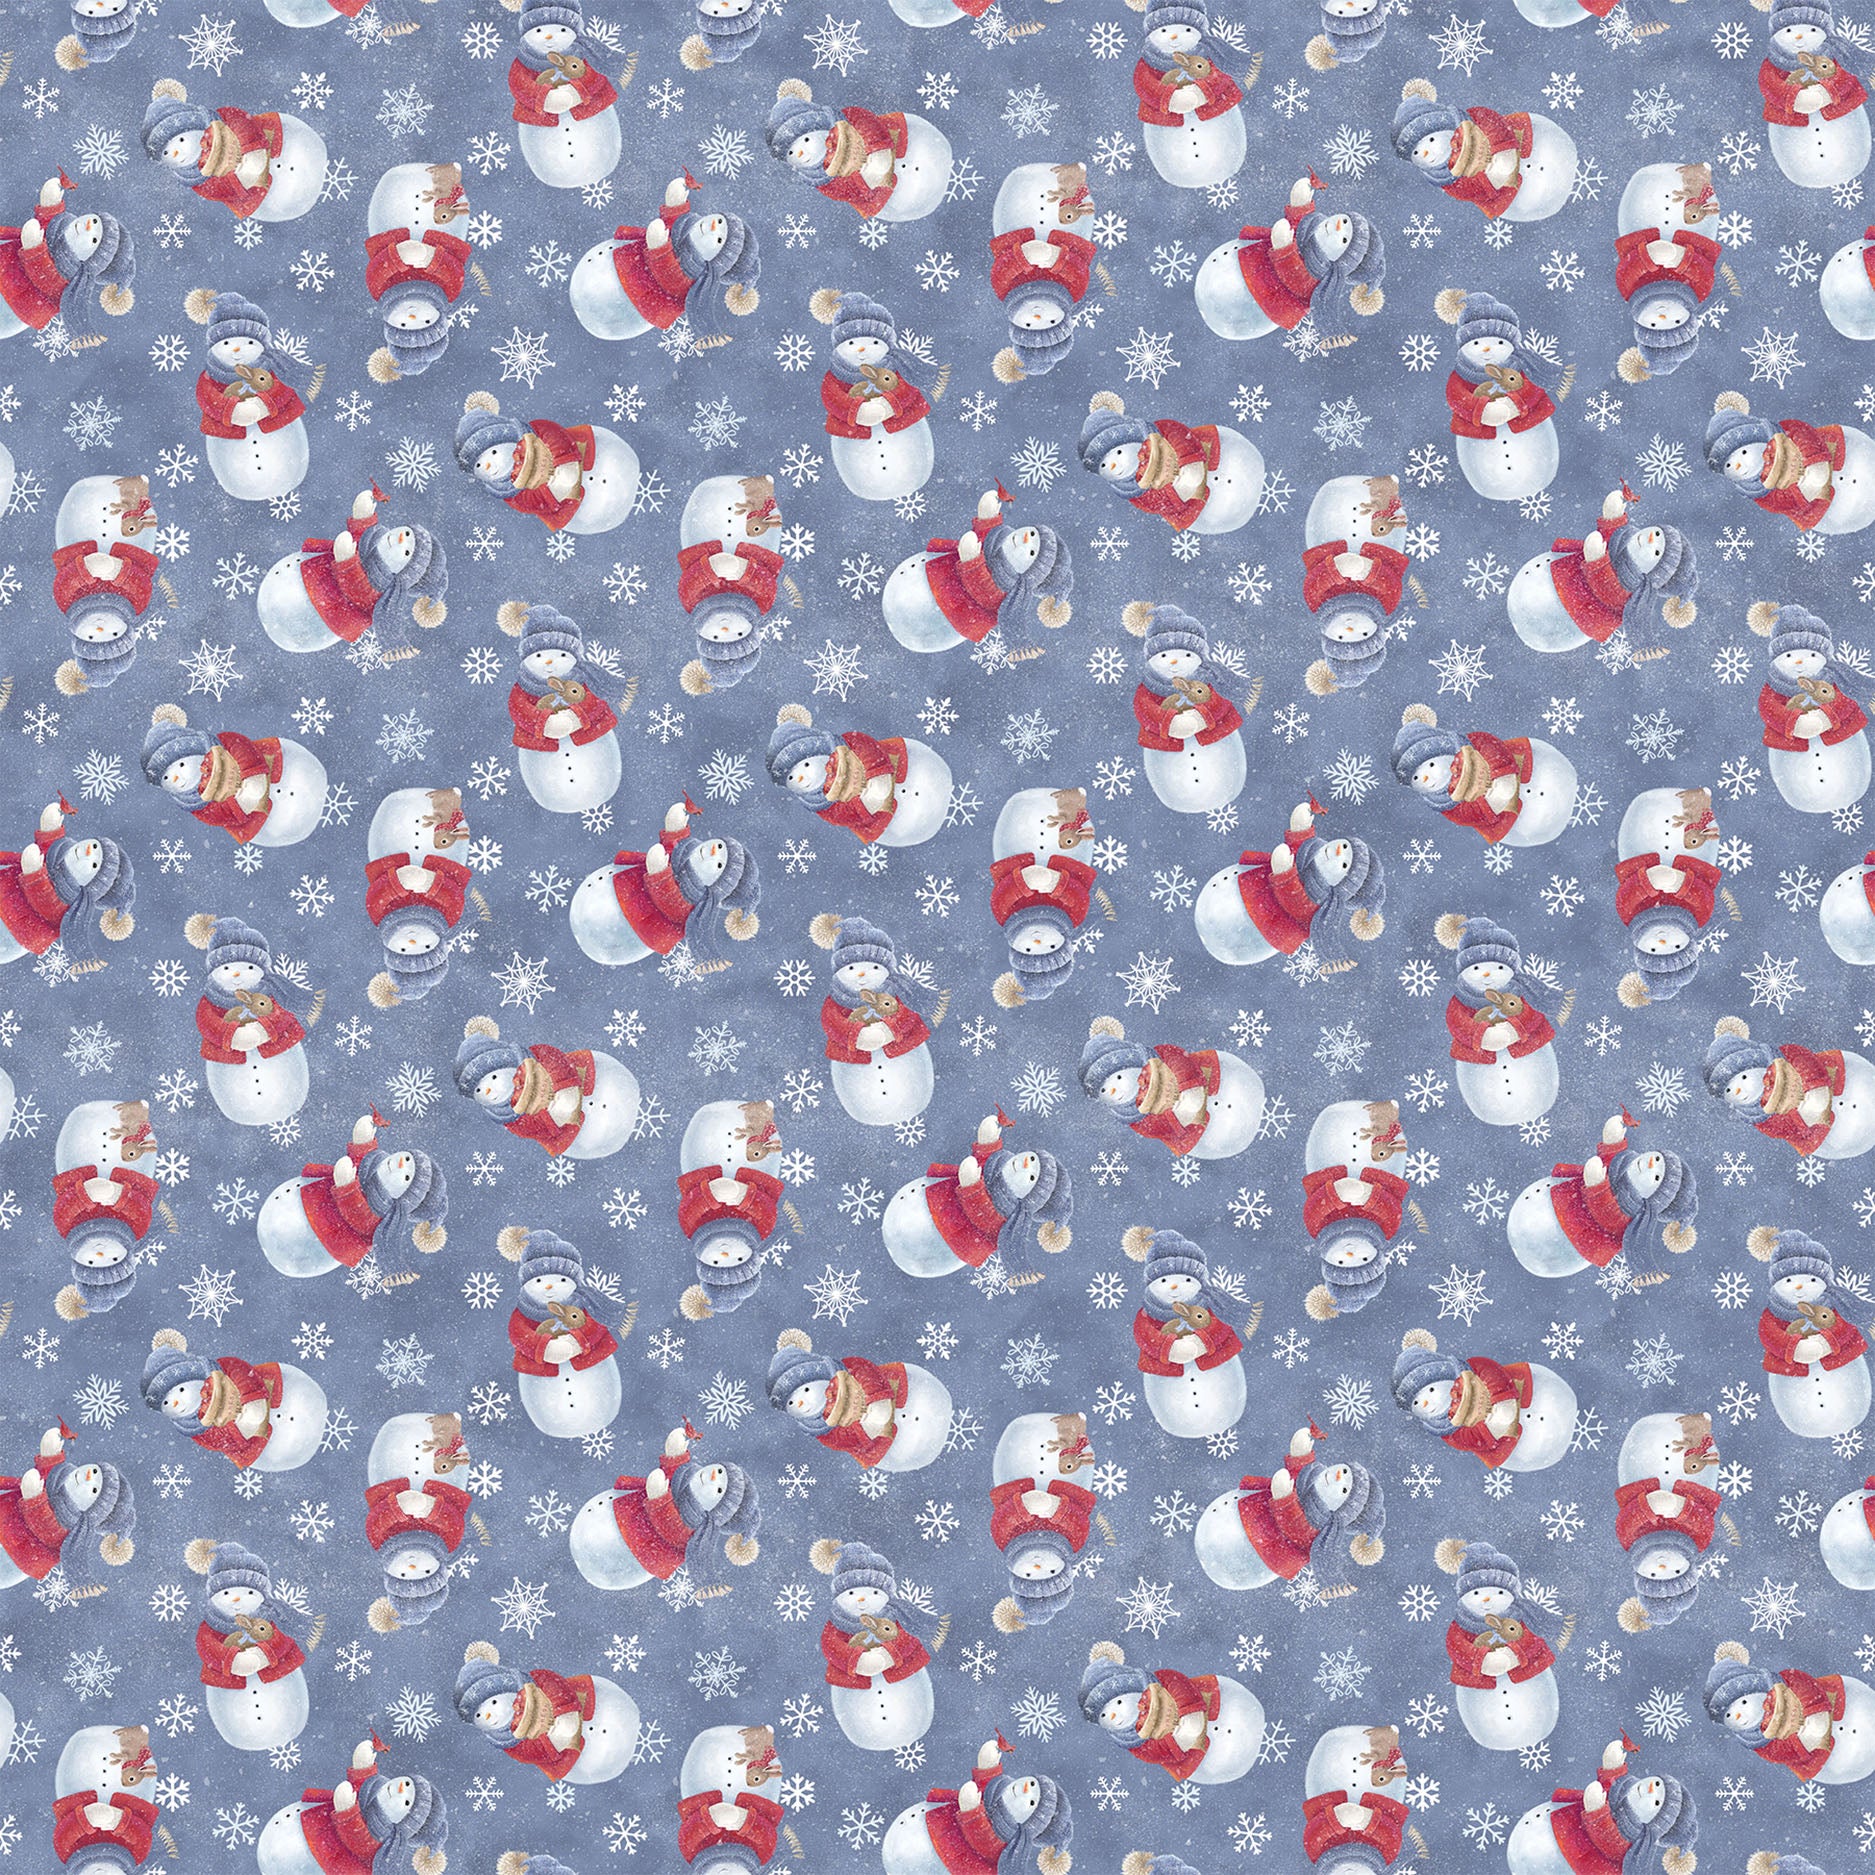 Fabric Flannel, Little Donkey's Christmas: Dark Blue Multi, Snowman Toss     F25328-44